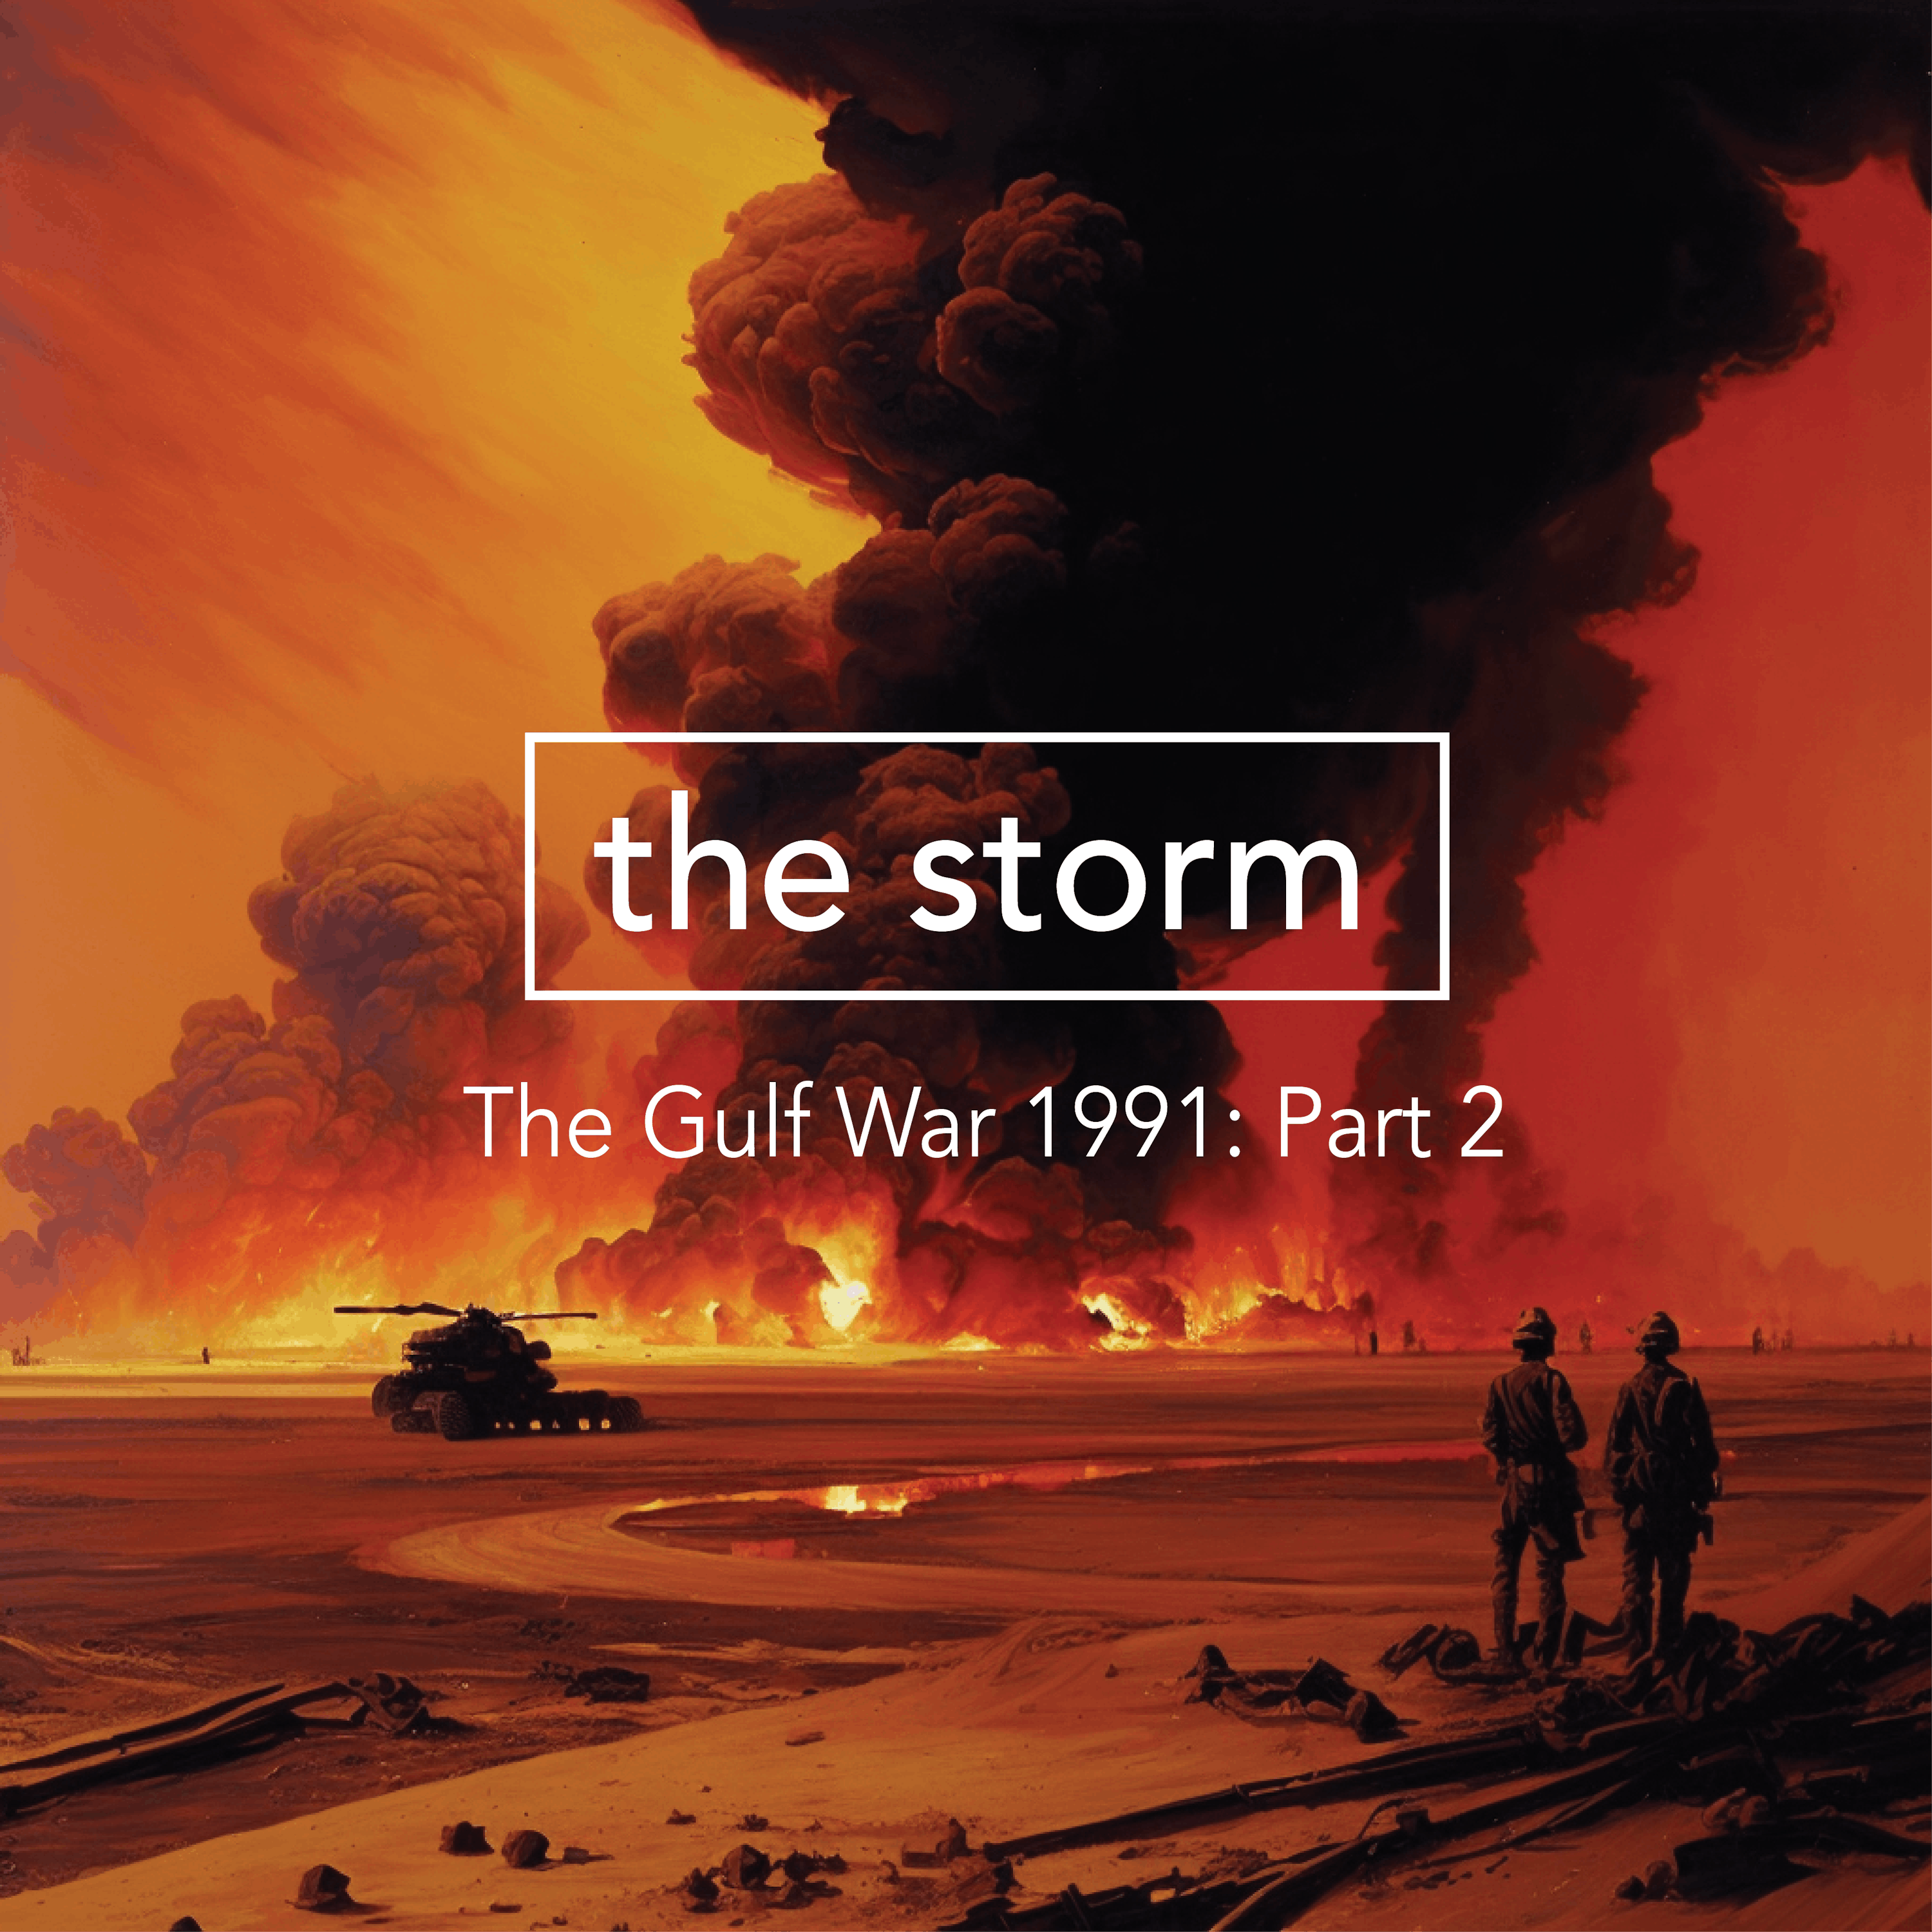 The Gulf War 1991 – Part 2: The Storm